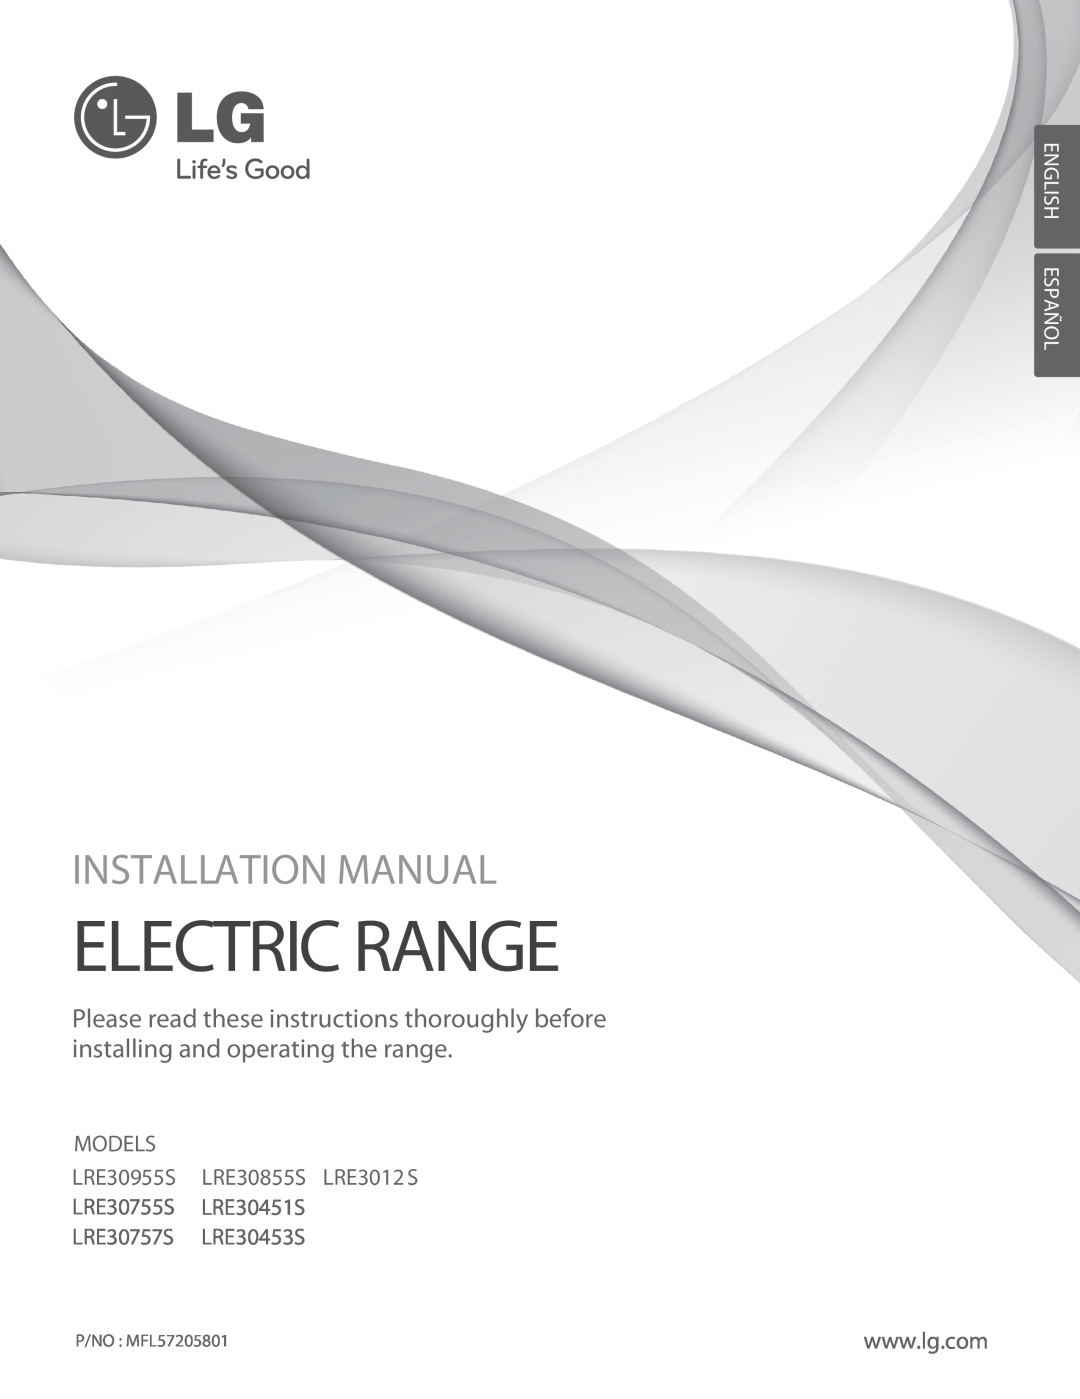 LG Electronics LRE3012S installation manual Electric Range, Installation Manual, LRE30757S LRE30453S, English Español 